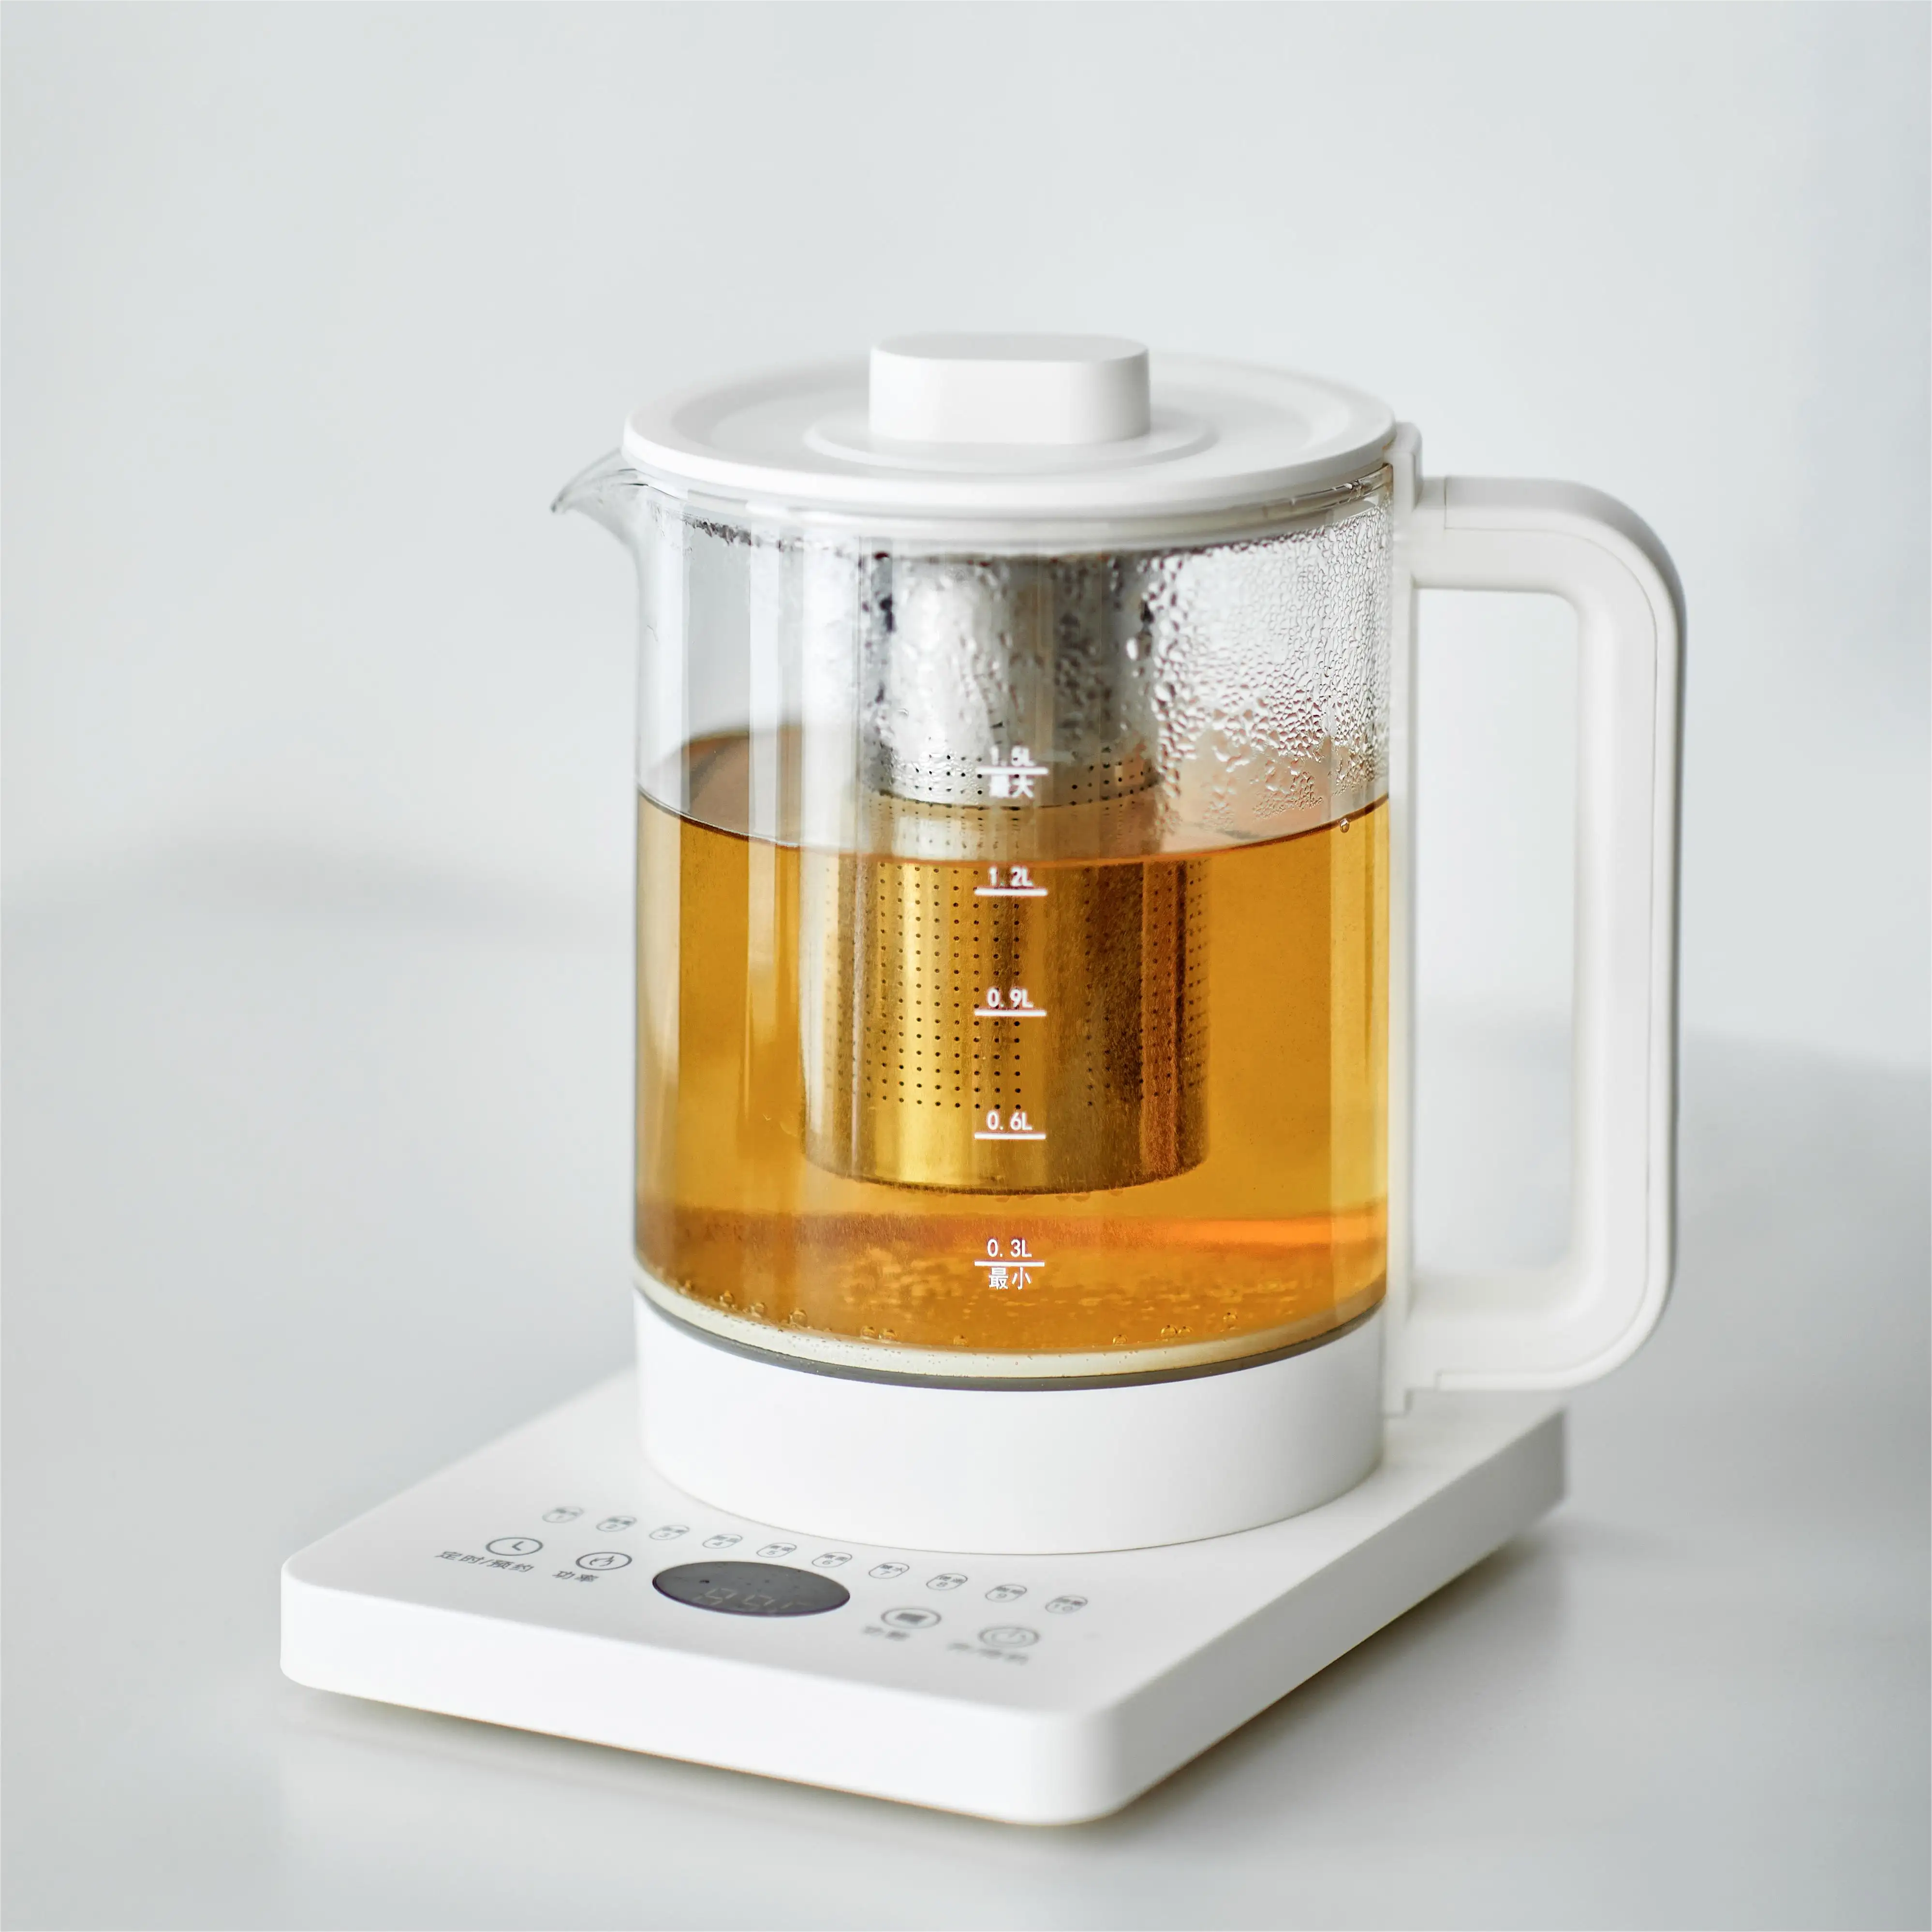 स्मार्ट 1.5L स्वास्थ्य बर्तन शीर्ष लोकप्रिय उच्च शक्ति तेजी से हीटिंग बिजली चाय की केतली